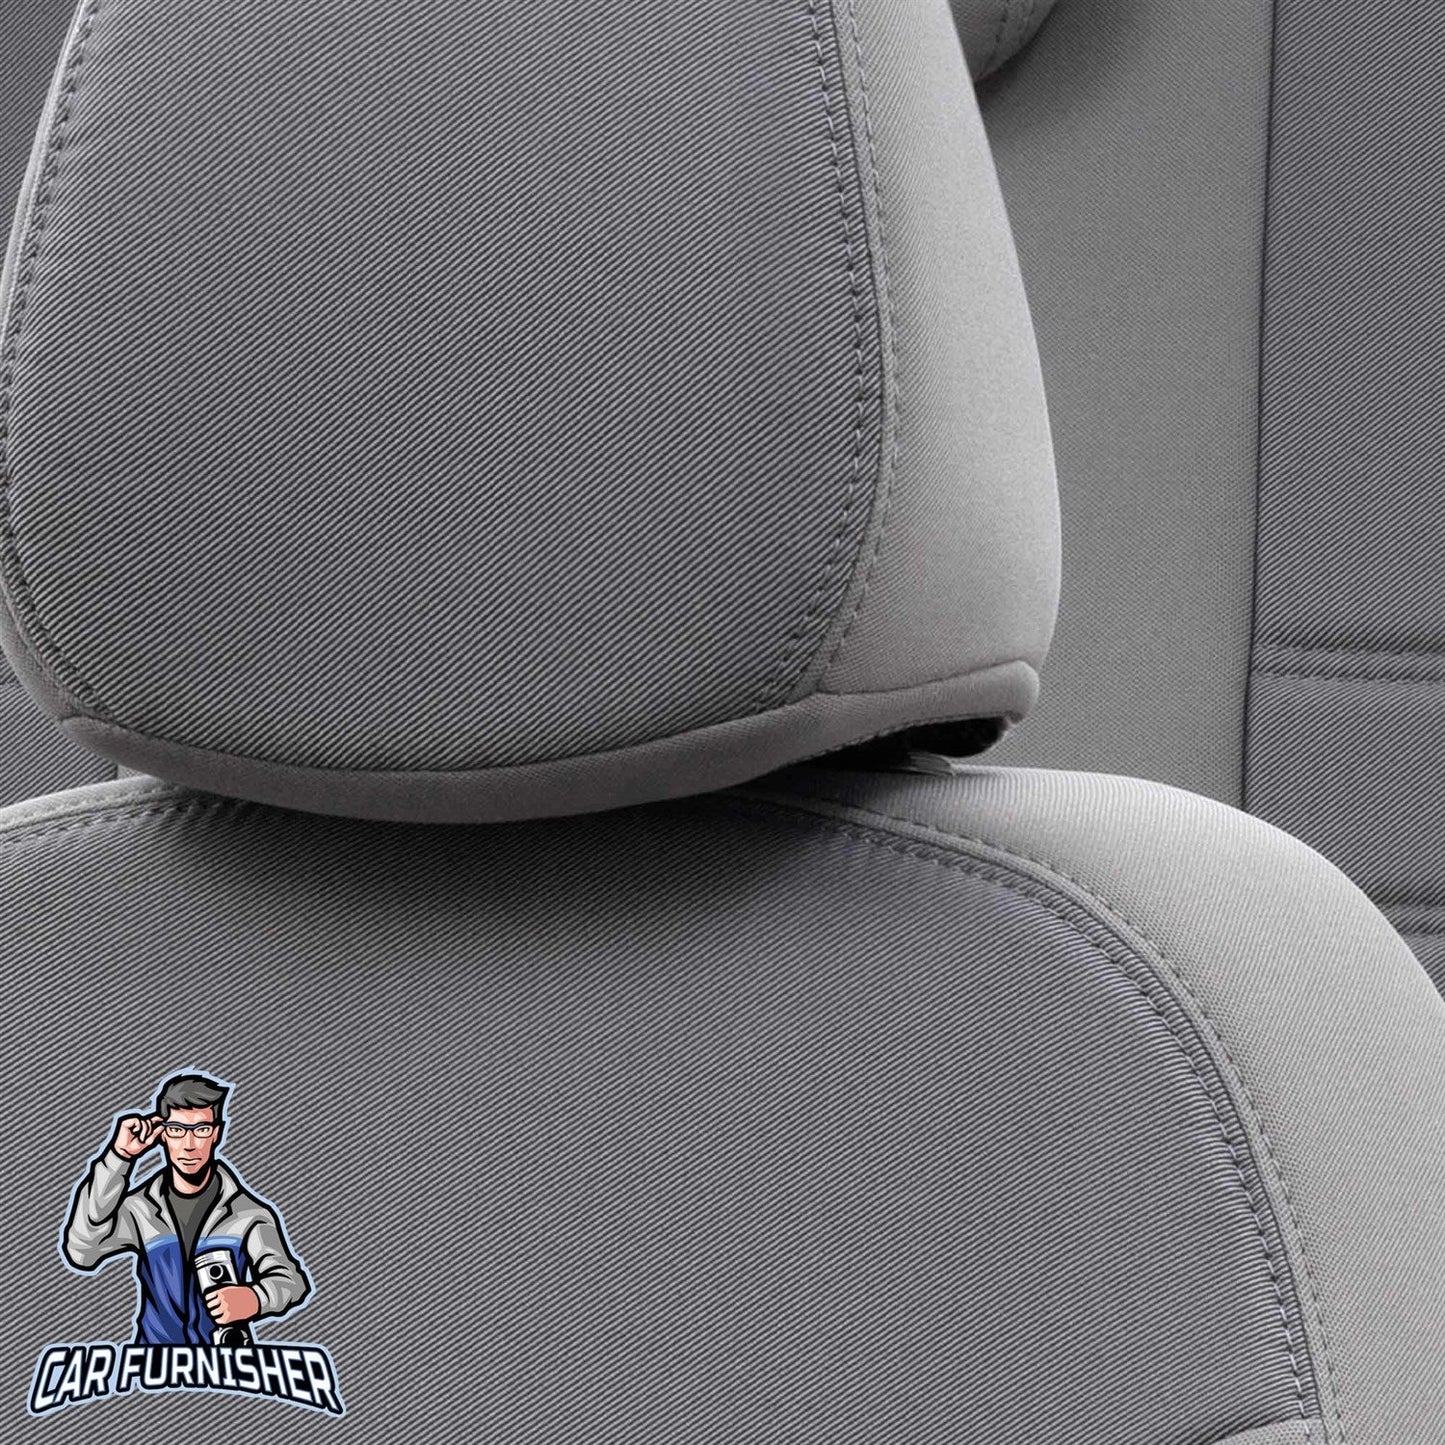 Landrover Freelander Car Seat Covers 1998-2012 Original Design Gray Jacquard Fabric